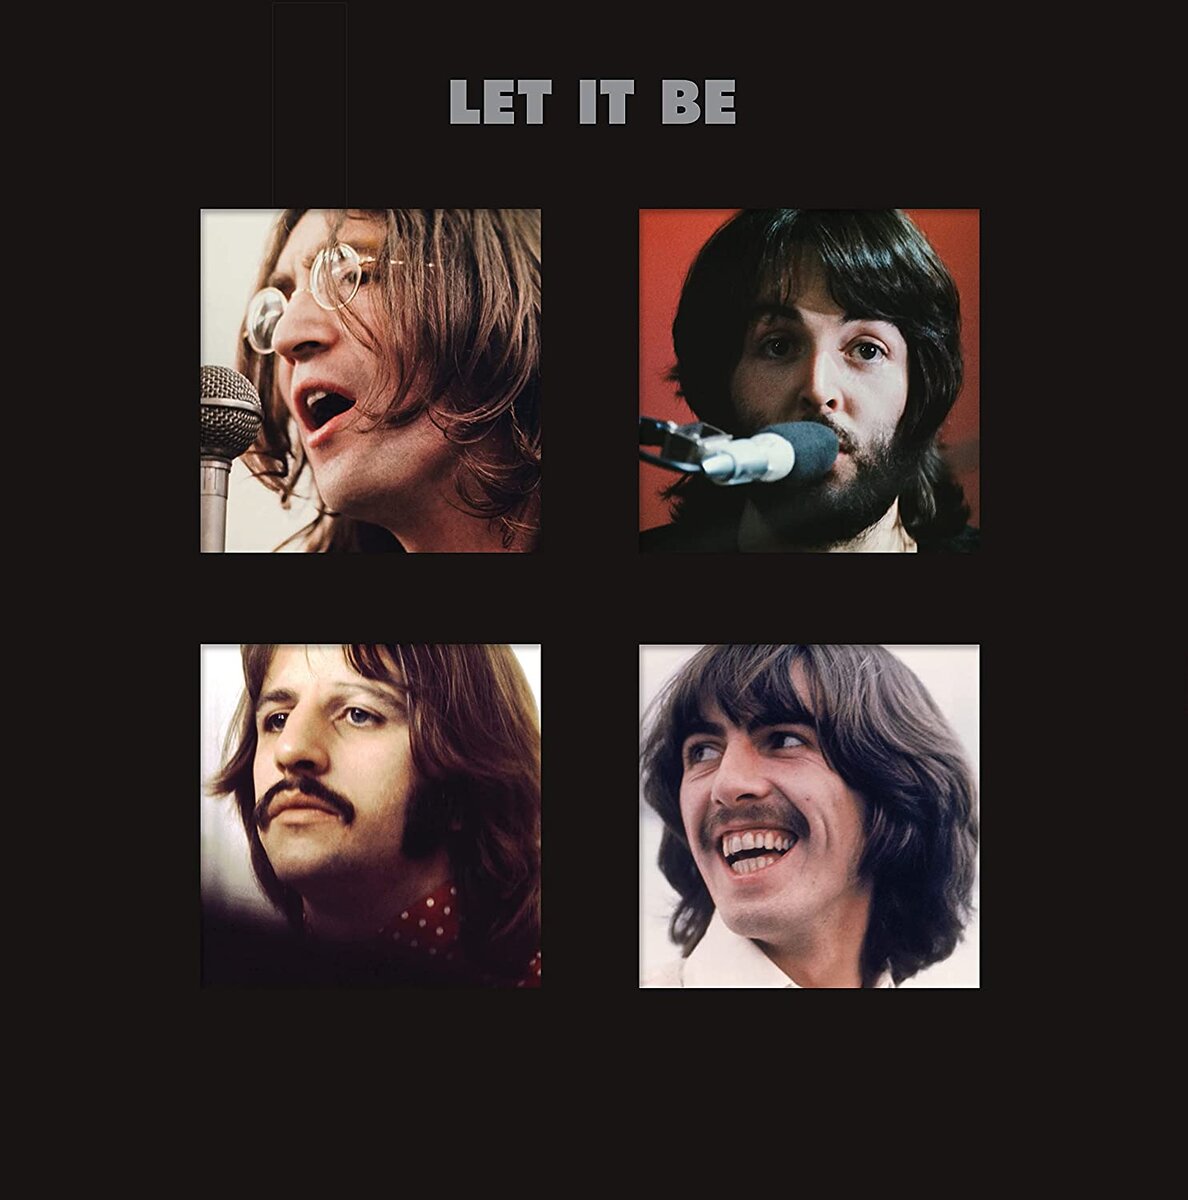 The Beatles Let it be пластинка. The Beatles Let it be CD 2009. The Beatles Let it be обложка альбома. Let it be (Beatles album). Лет ит би слушать